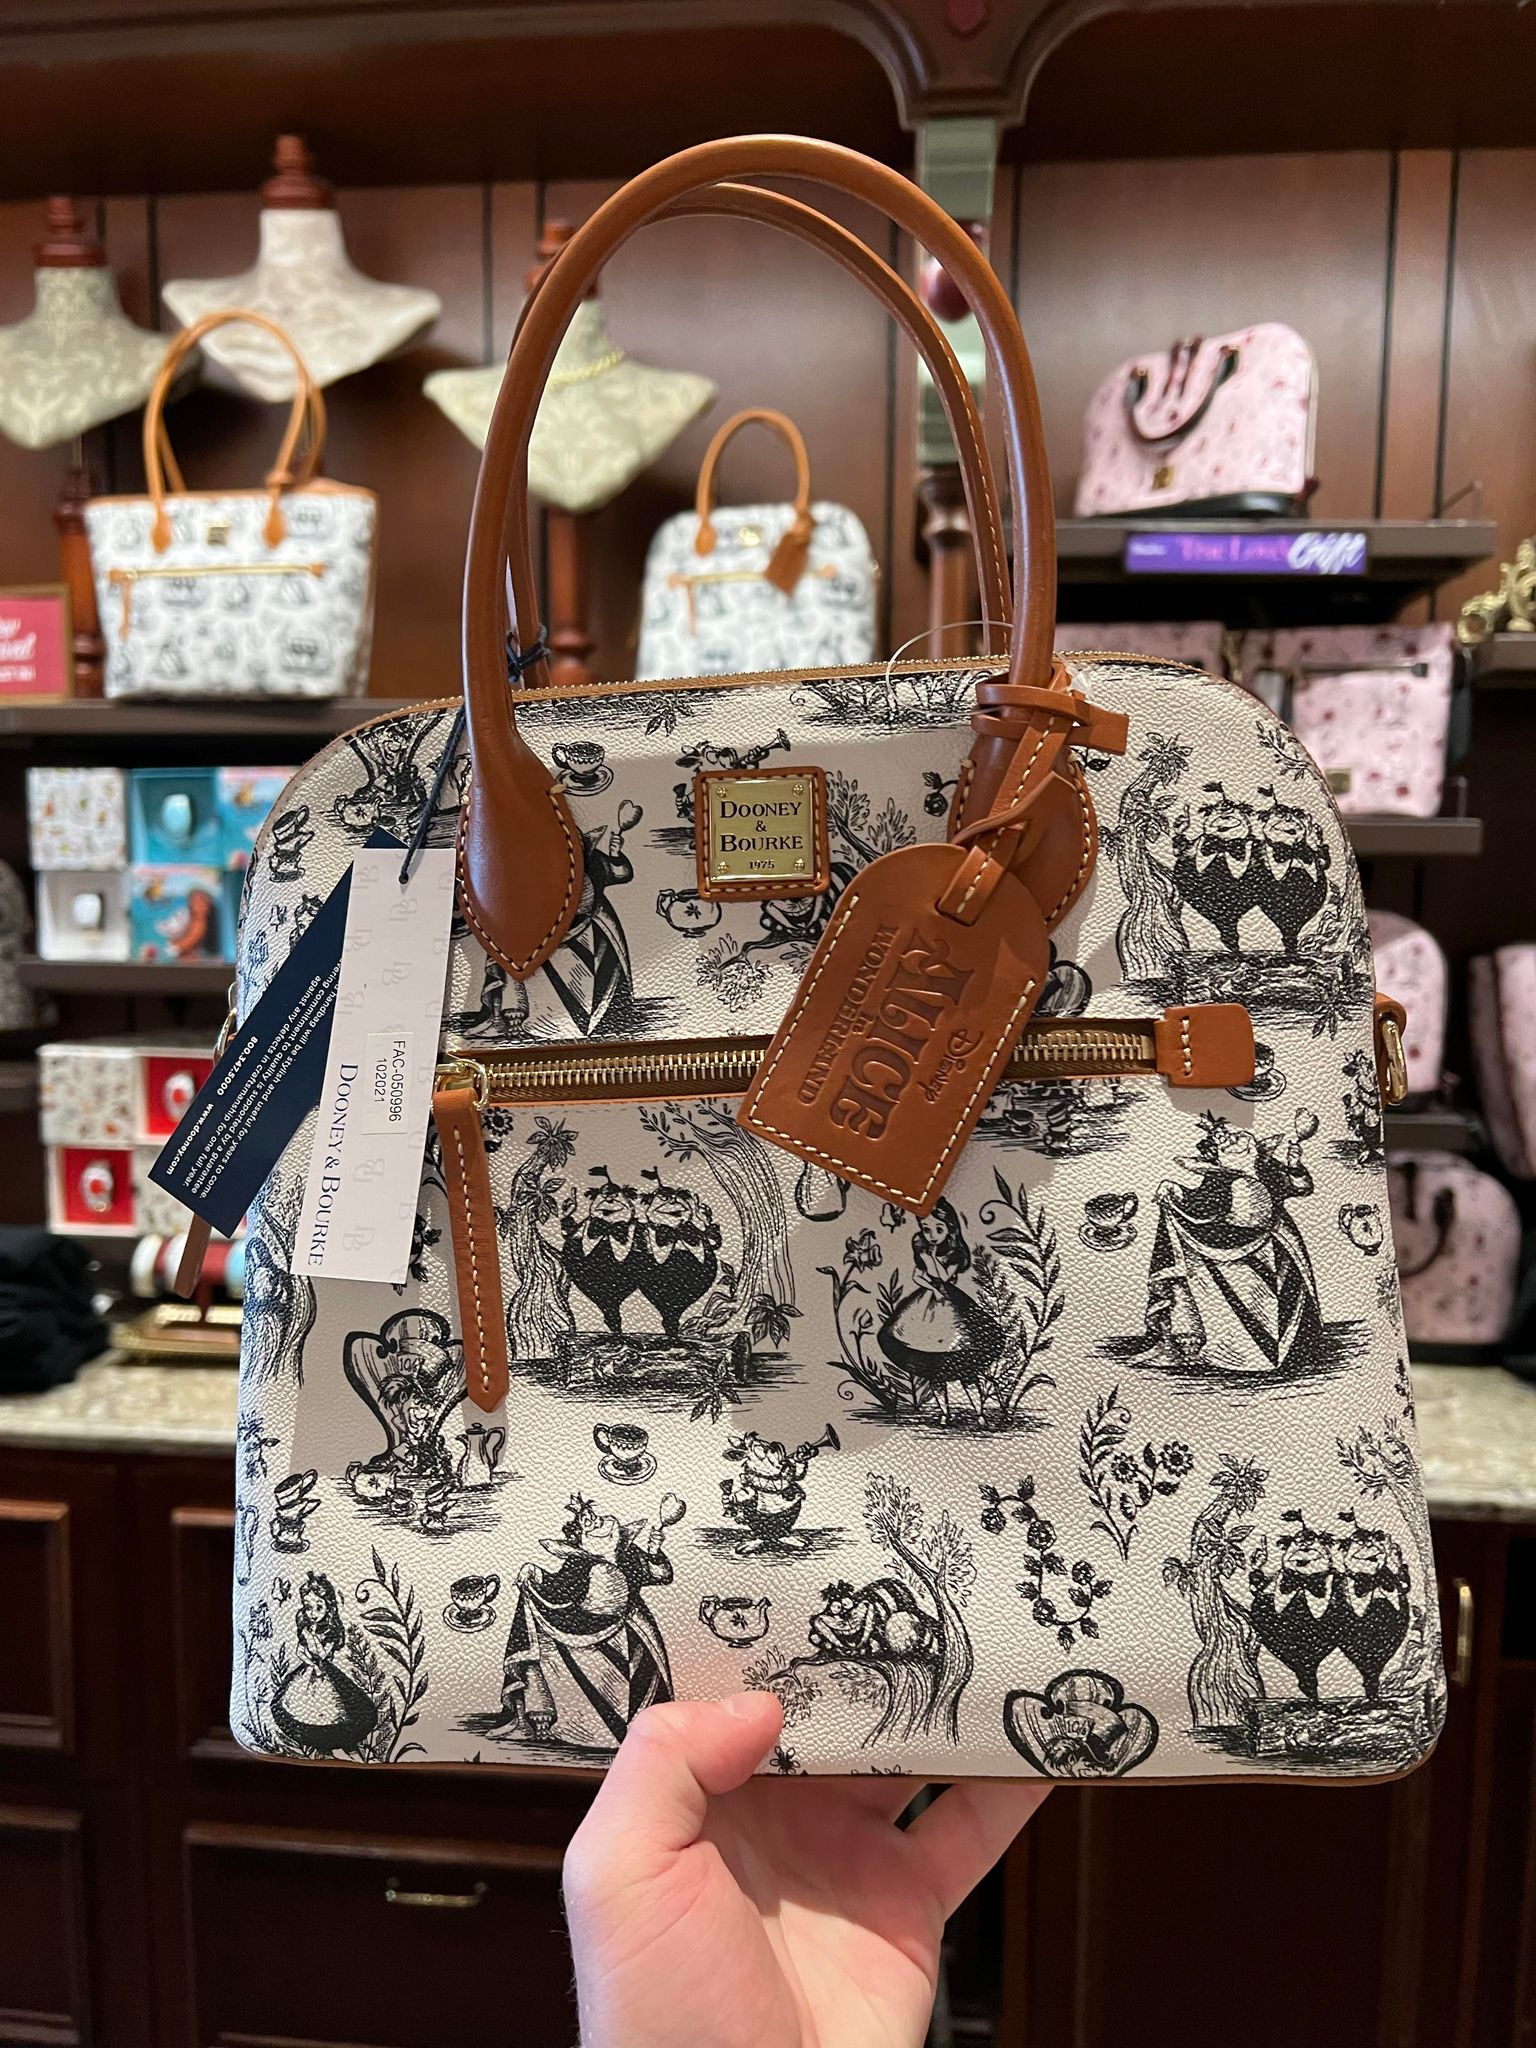 Disney Dooney & Bourke Tote Bag - Alice in Wonderland